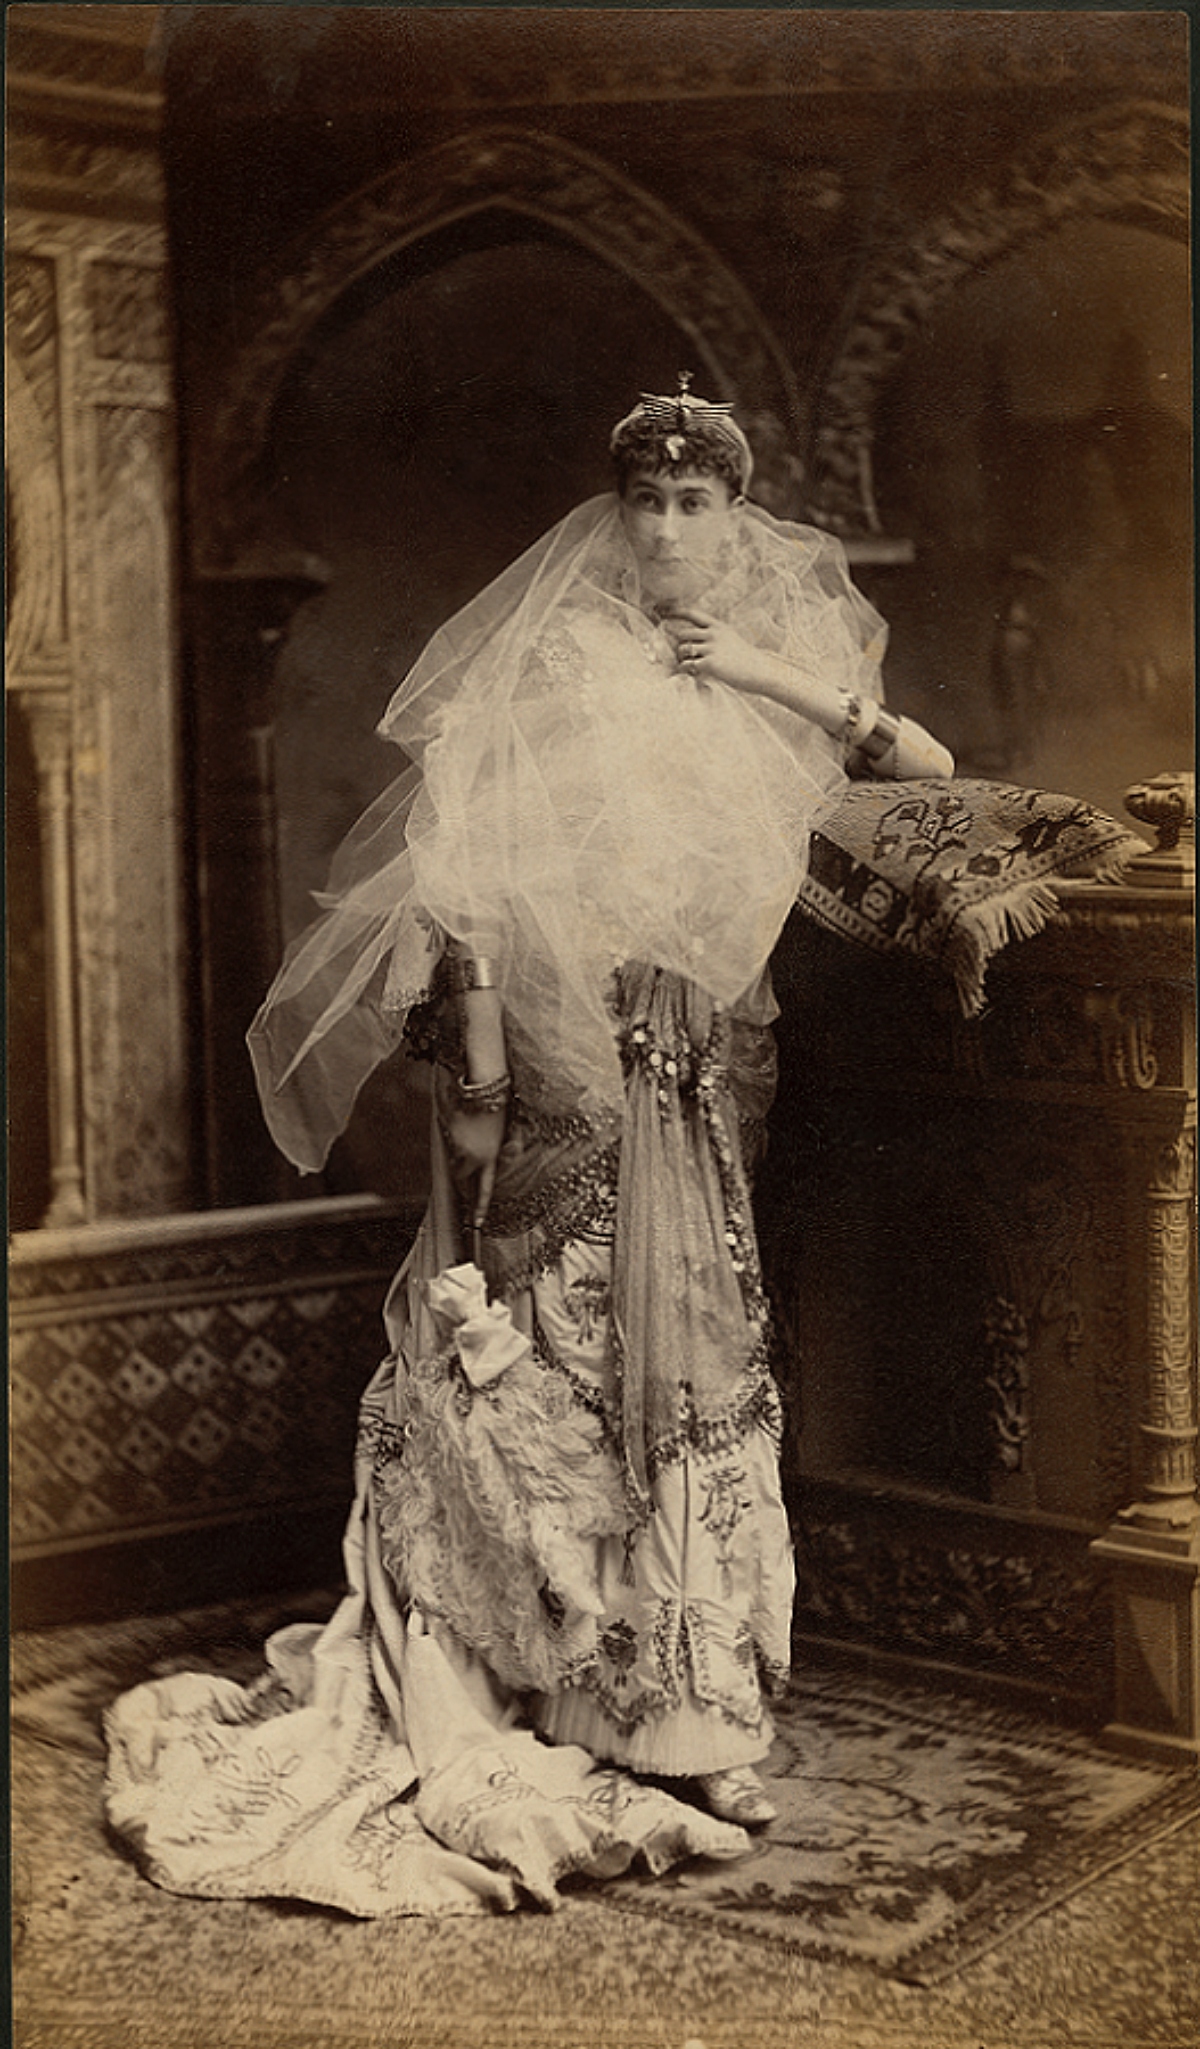 Mrs. John C. Mallory at the 1883 Vanderbilt Ball